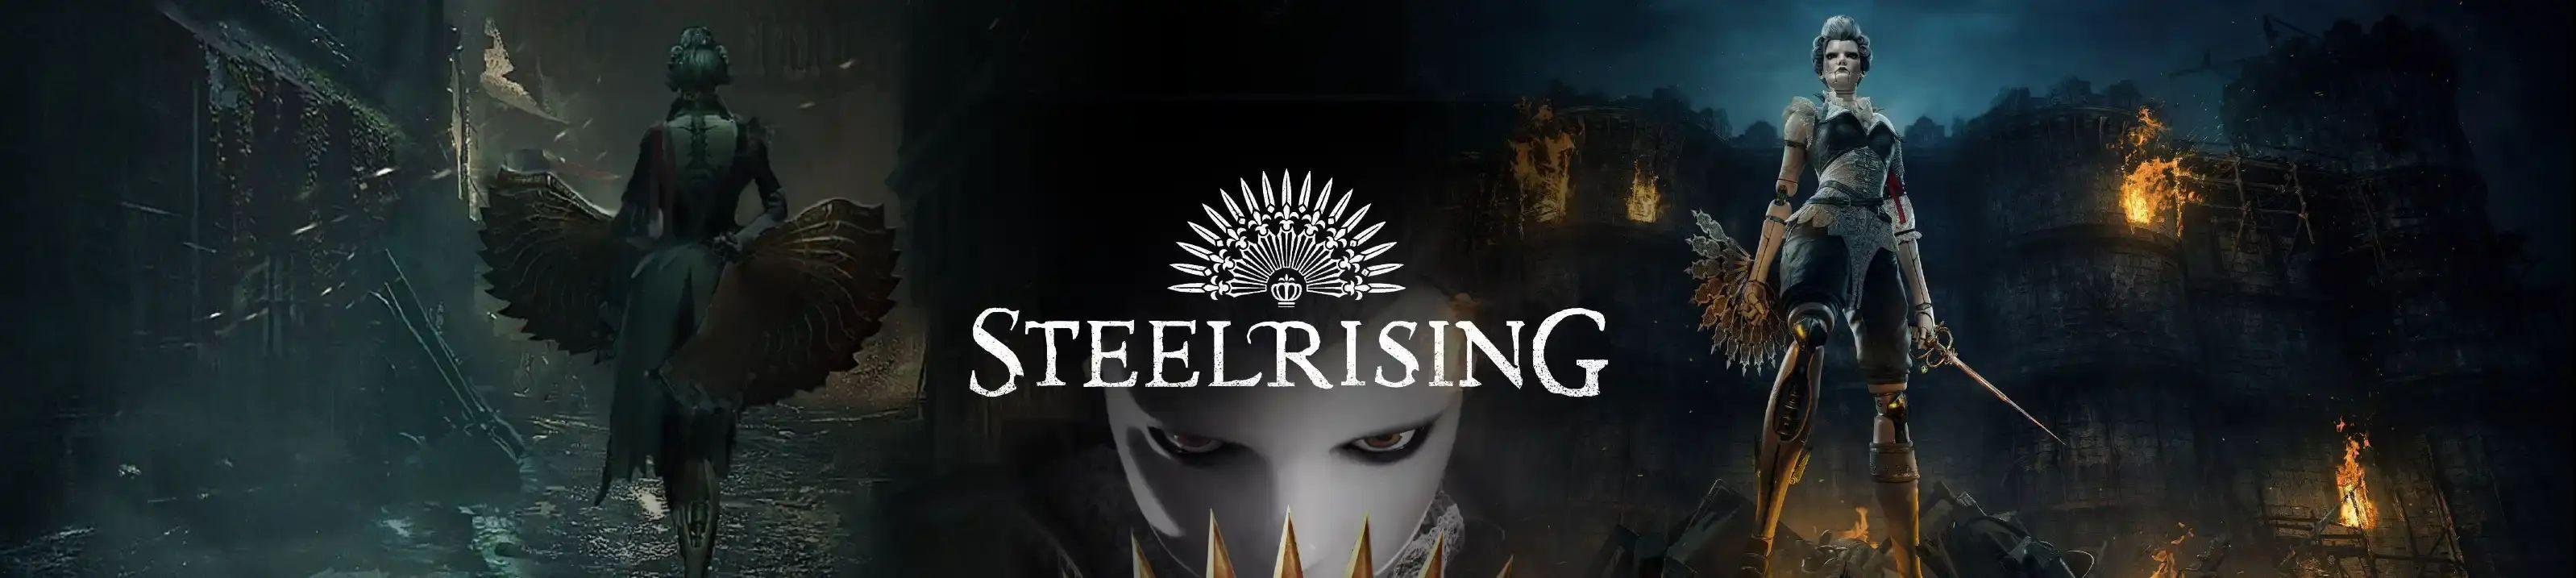 Steelrising Mobile